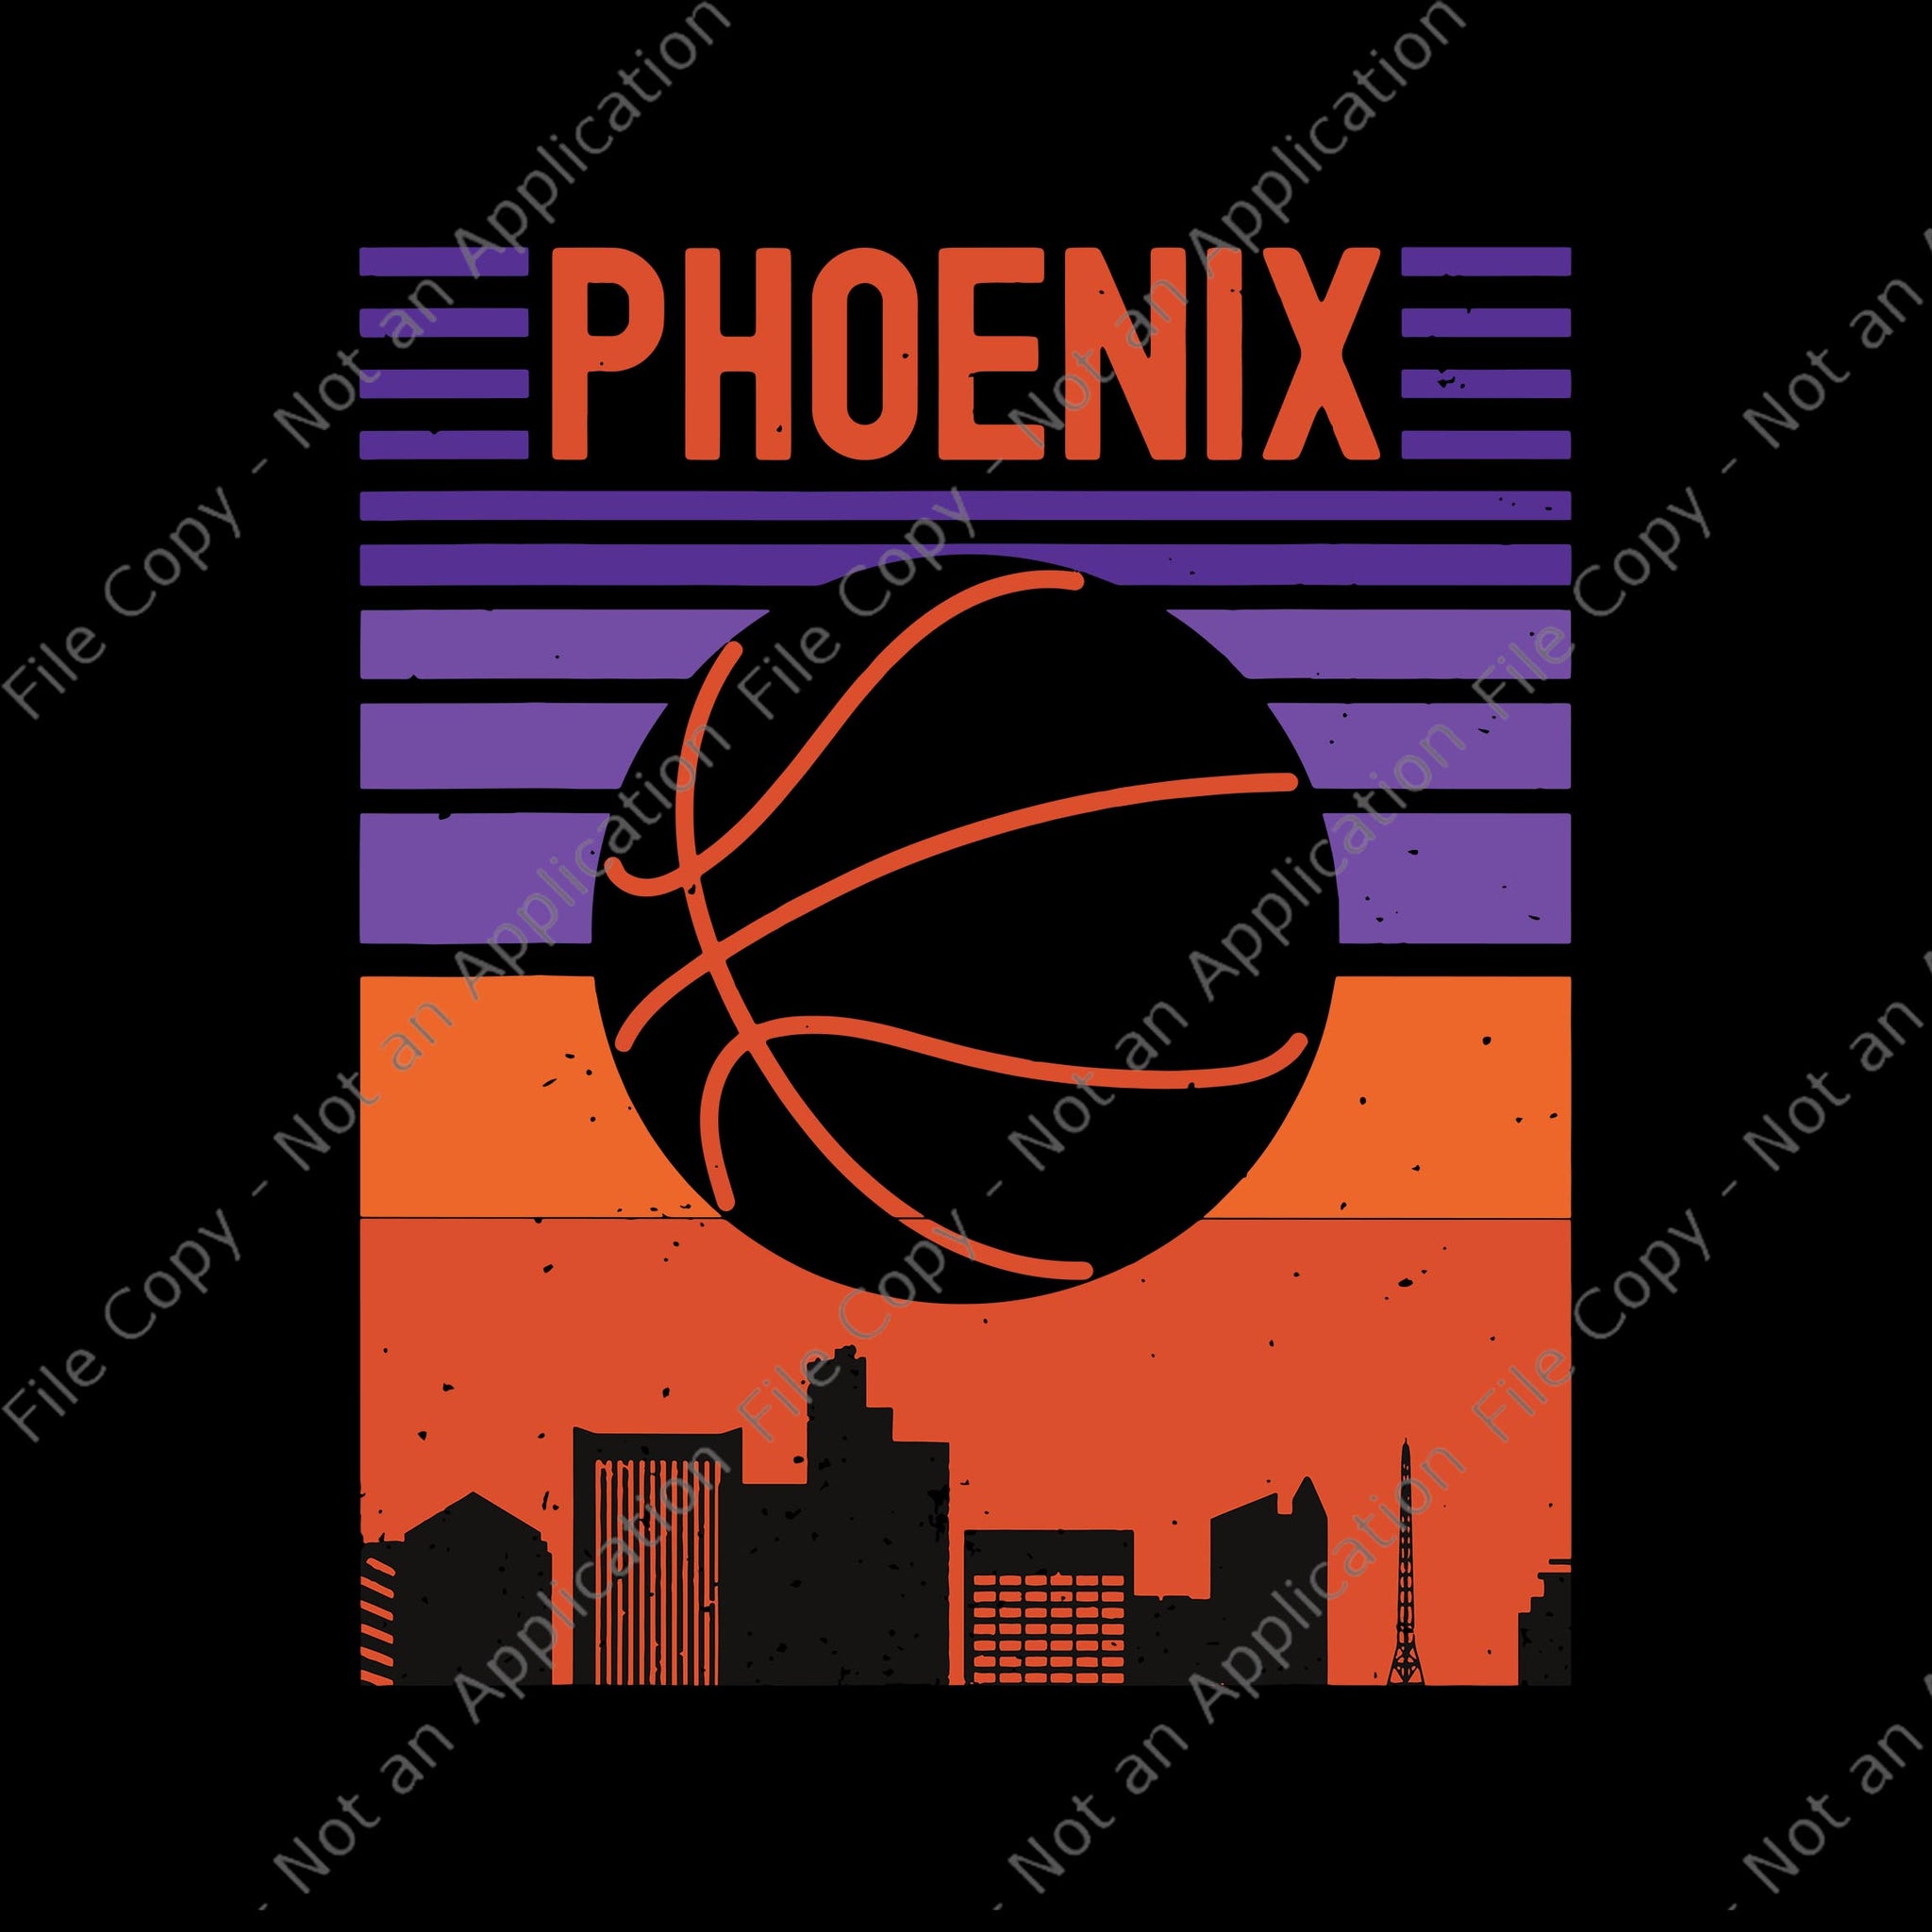 Phoenix Basketball Valley of Sun SVG, Phoenix Suns Champions 2021, Finals Valley Suns PHX suns basketball, The Valley Phoenix Suns Design Vector, png Phoenix Basketball design, Phoenix Basketball SVG